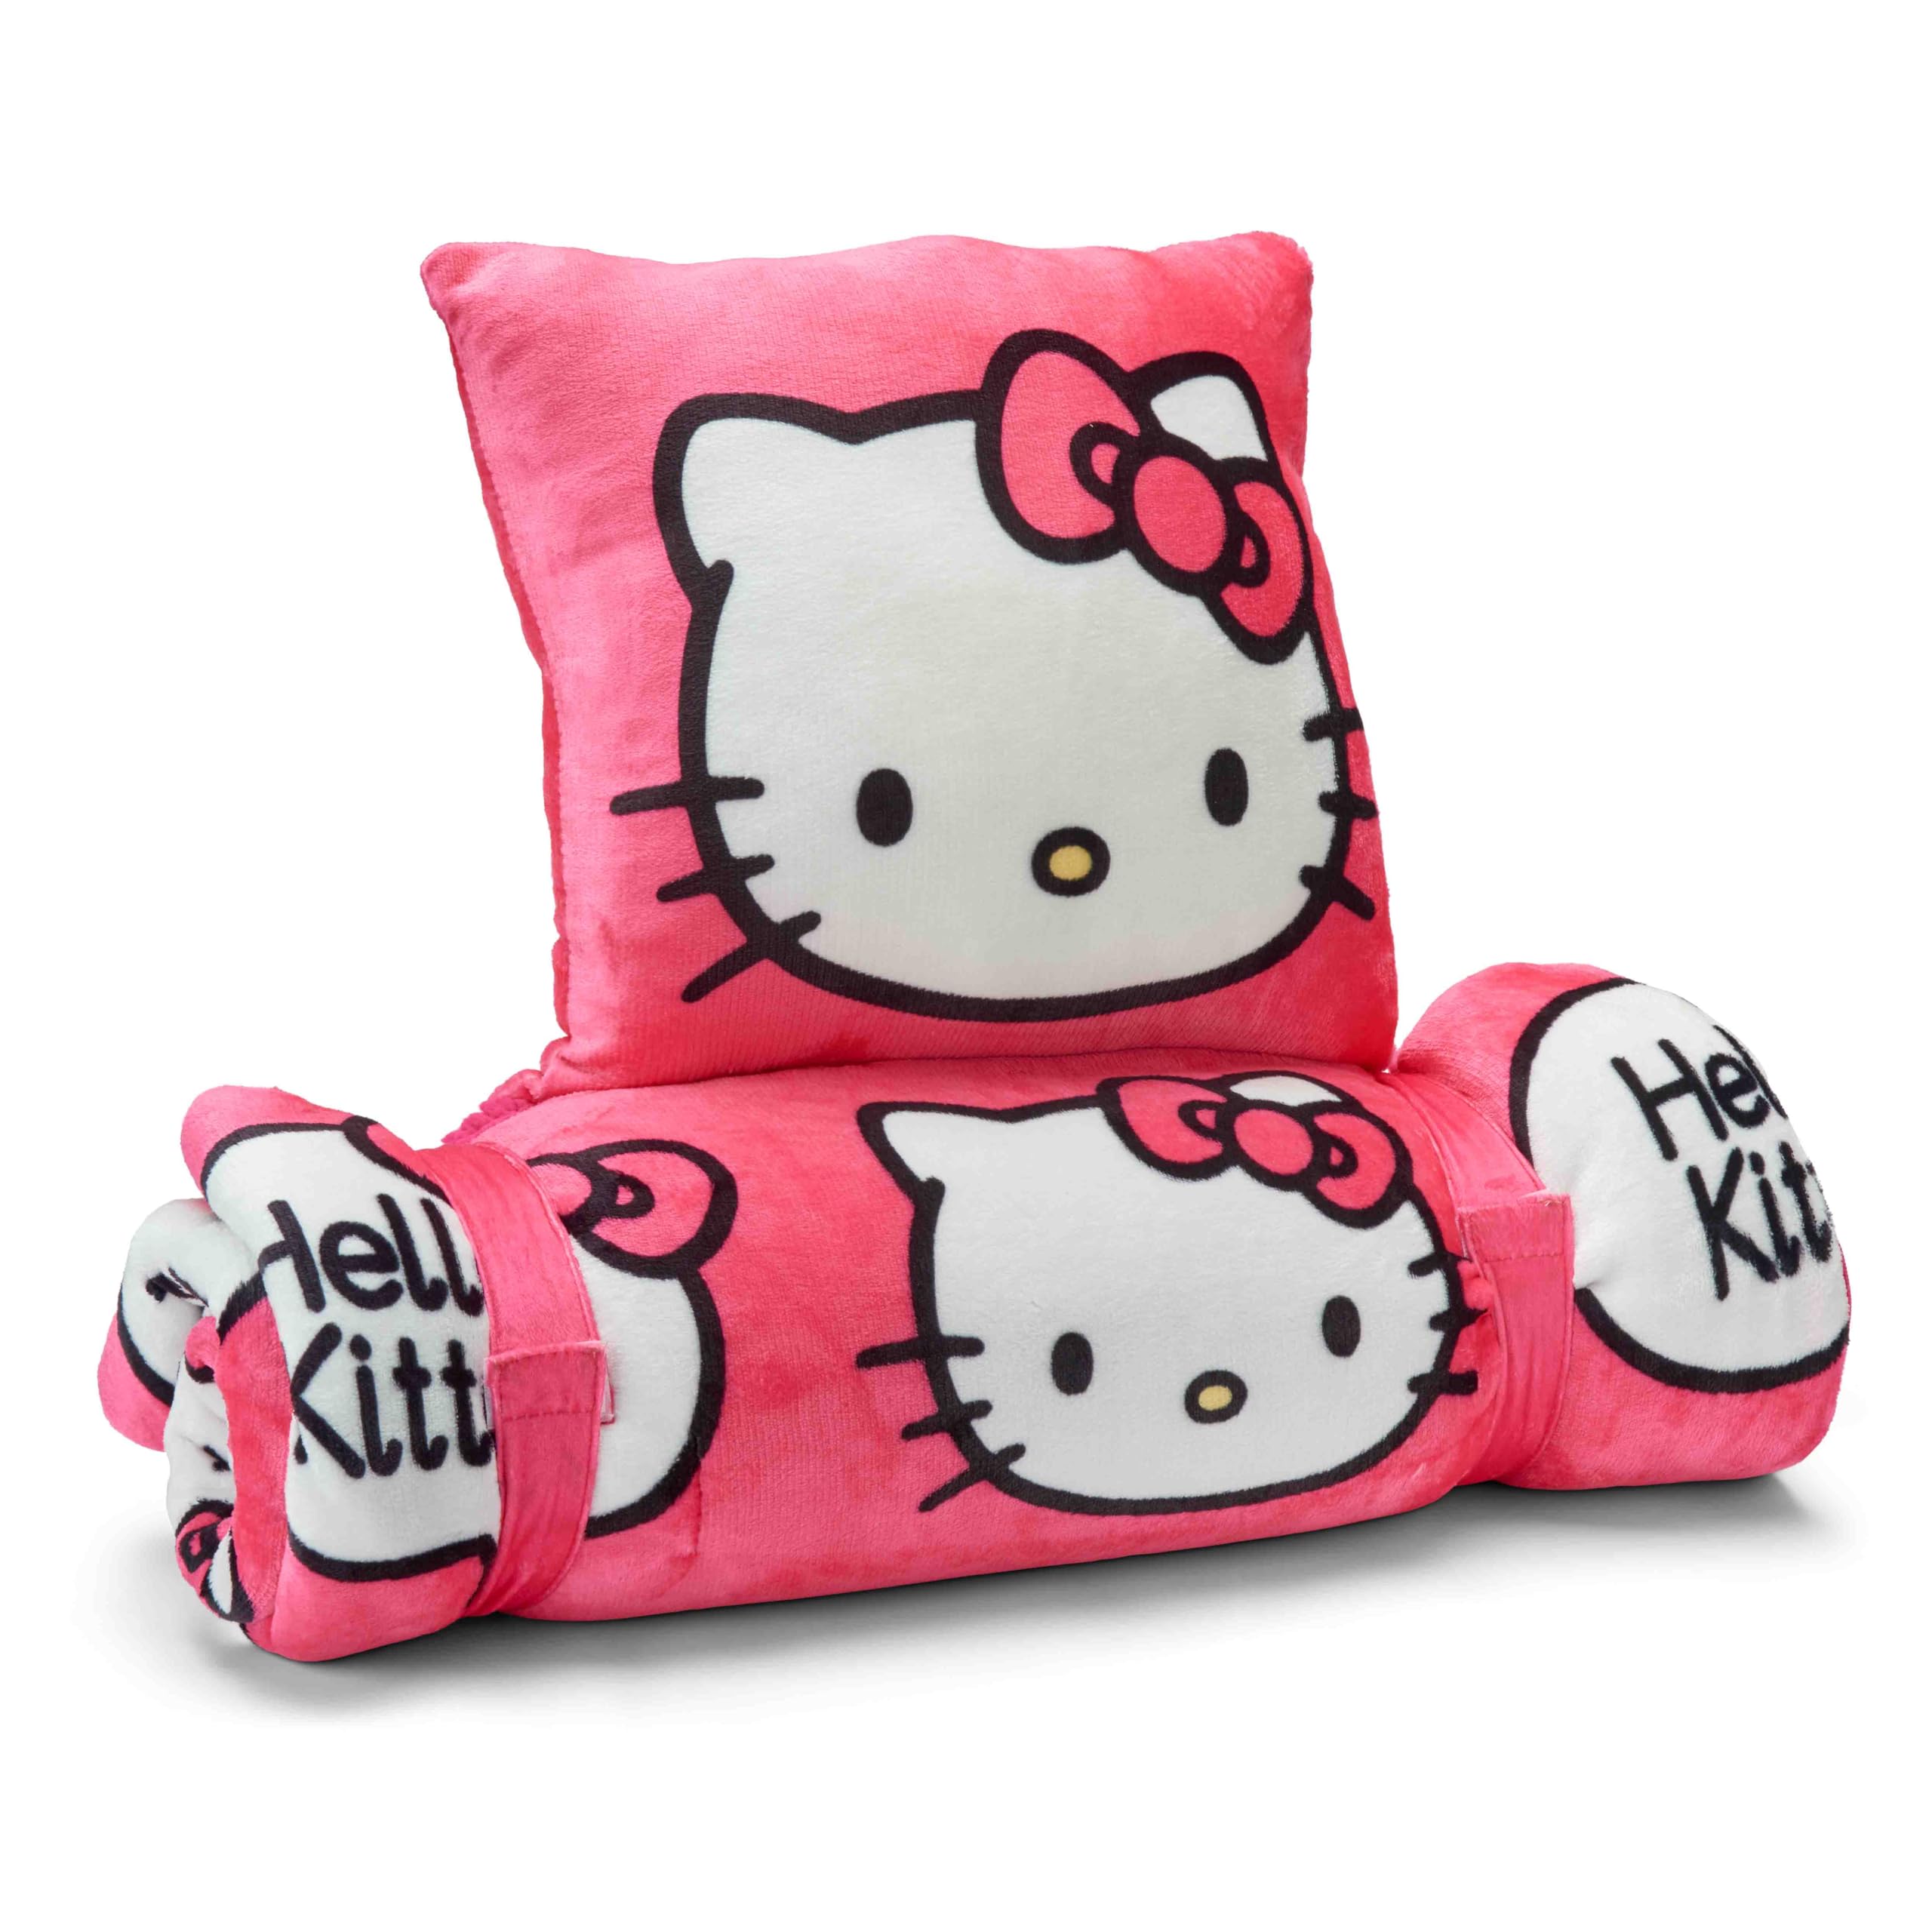 Northwest Hello Kitty Silk Touch Sherpa Slumber Bag, 27